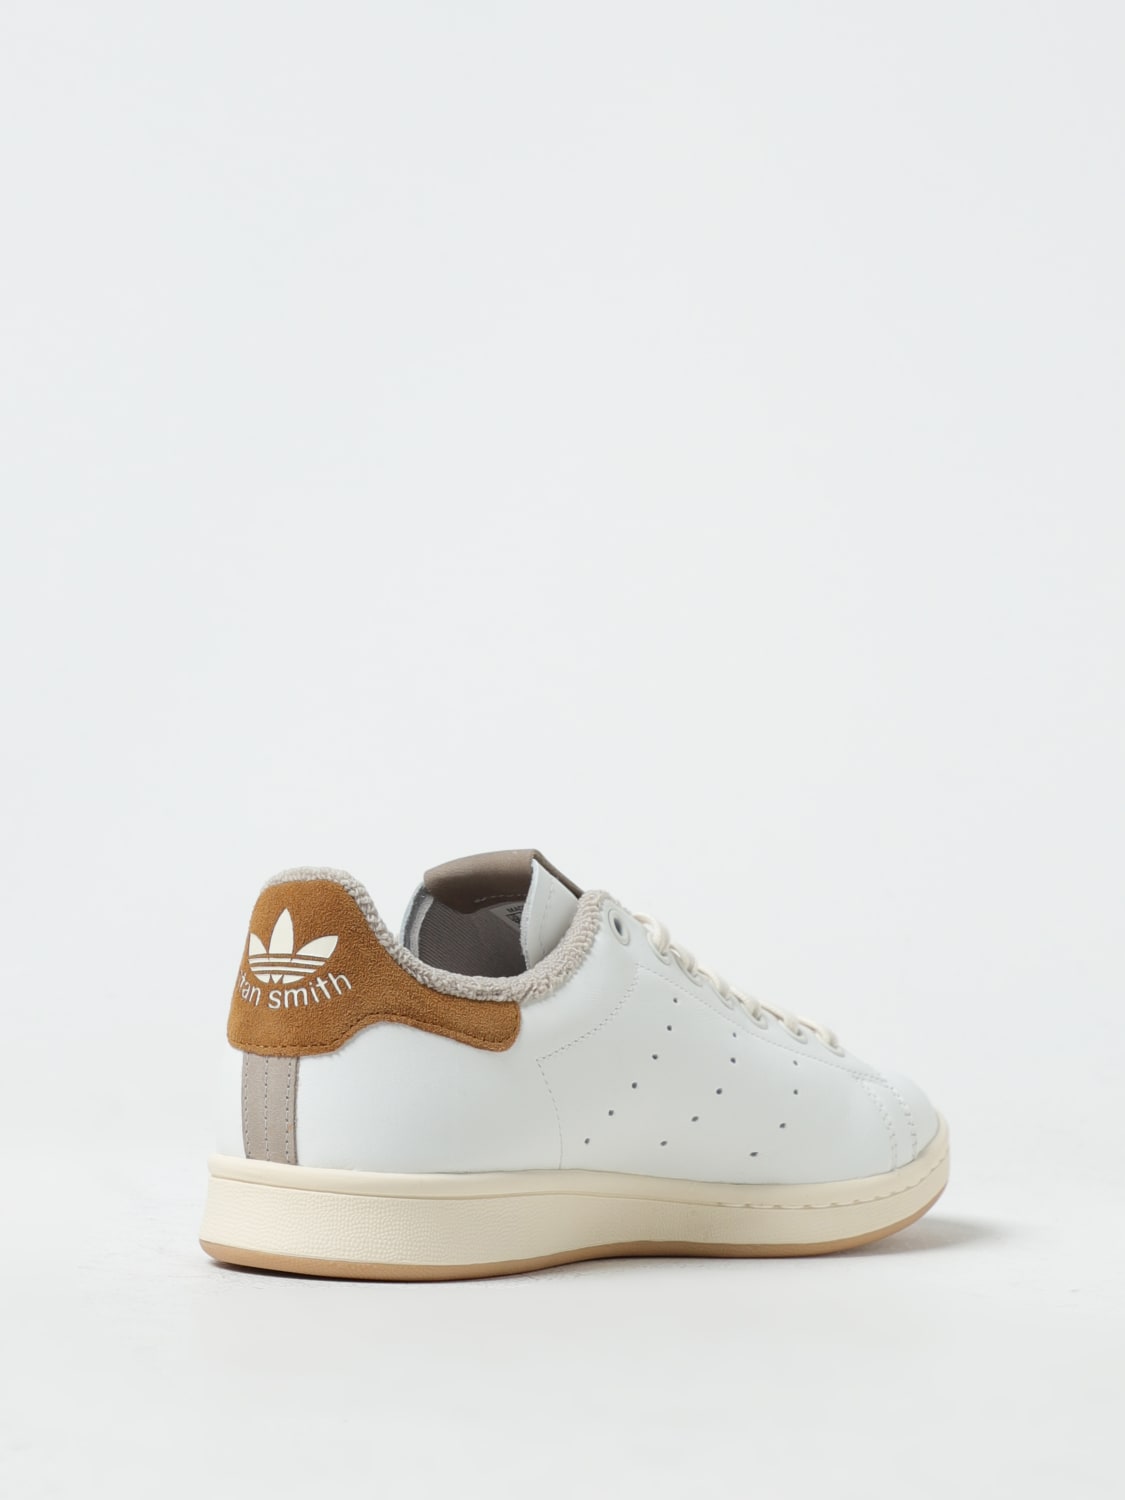 ADIDAS ORIGINALS: Stan Smith sneakers in leather - White | Adidas Originals  sneakers ID2031 online at